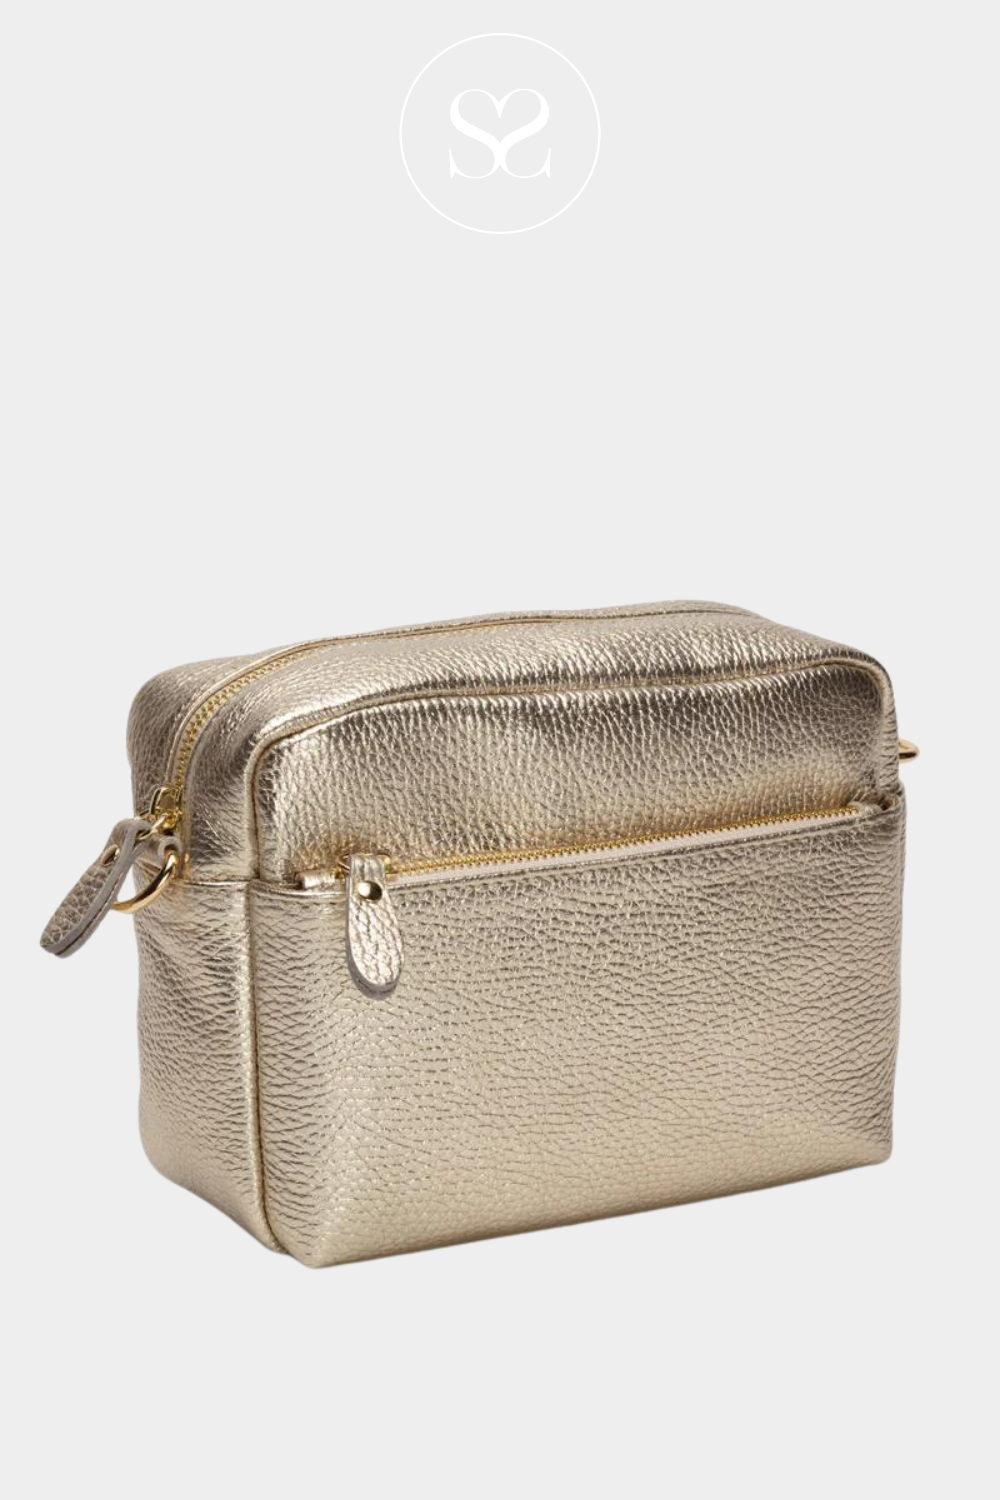 metallic gold leather crossbody bag / handbag